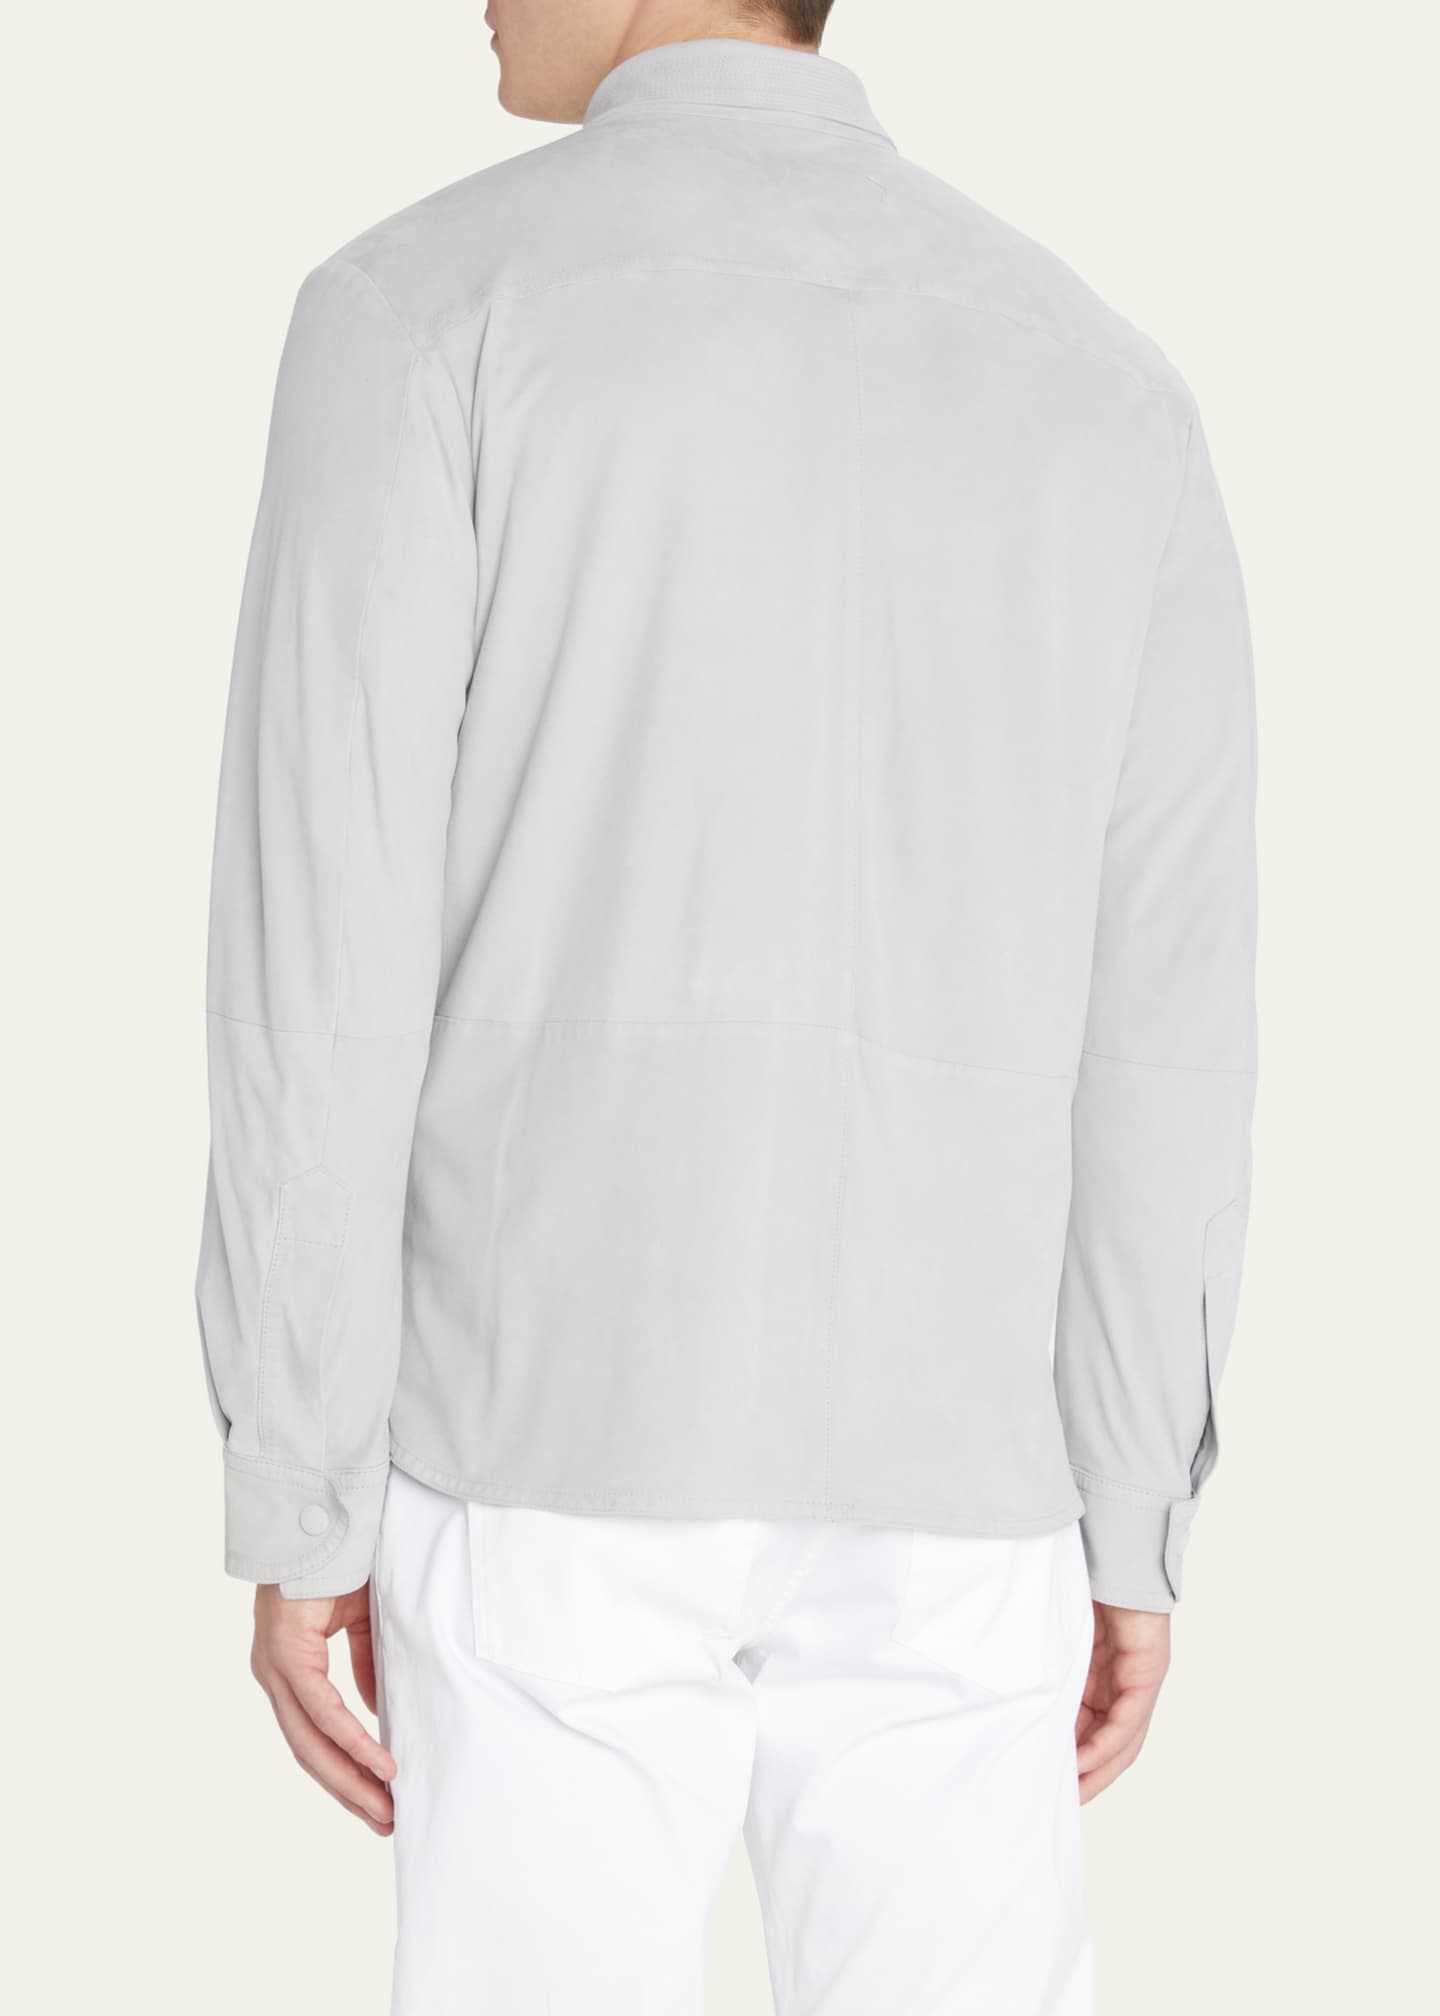 Giorgio Armani Men's Tonal Suede-Leather Shirt Jacket - Bergdorf Goodman